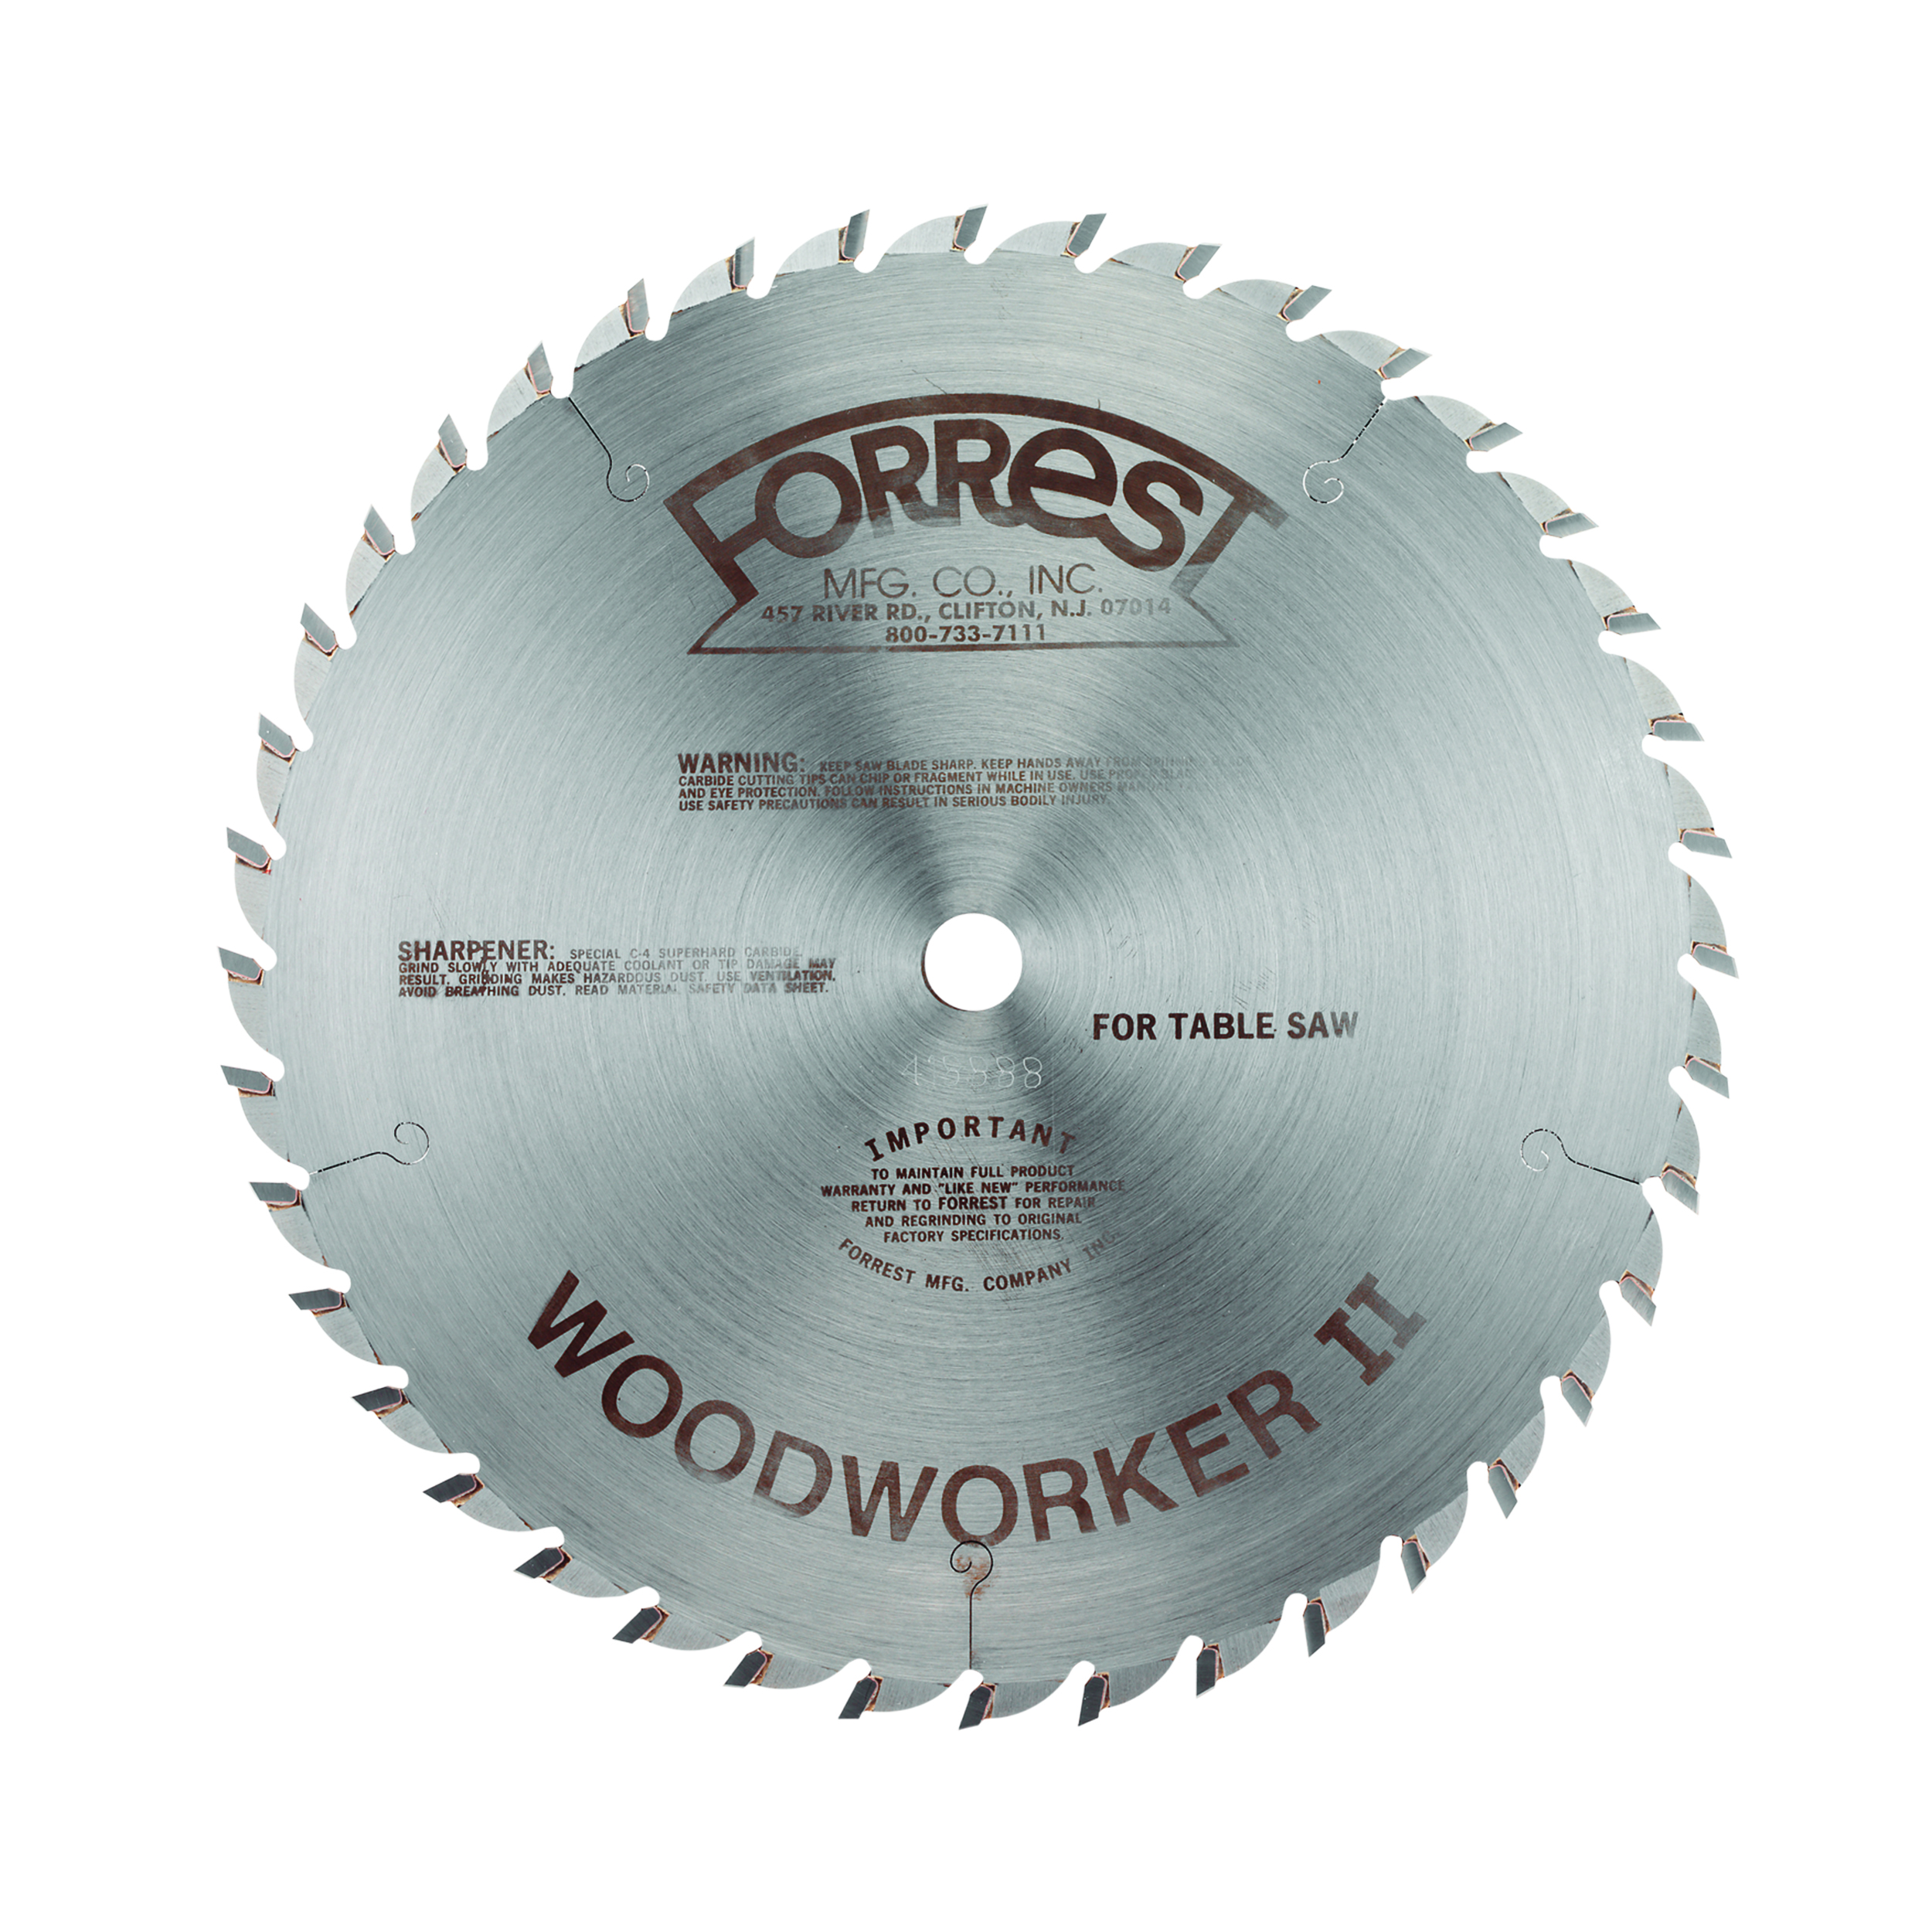 Ww10407125 Woodworker Ii Carbide Tipped Circular Saw Blade 10" X 40 Tooth